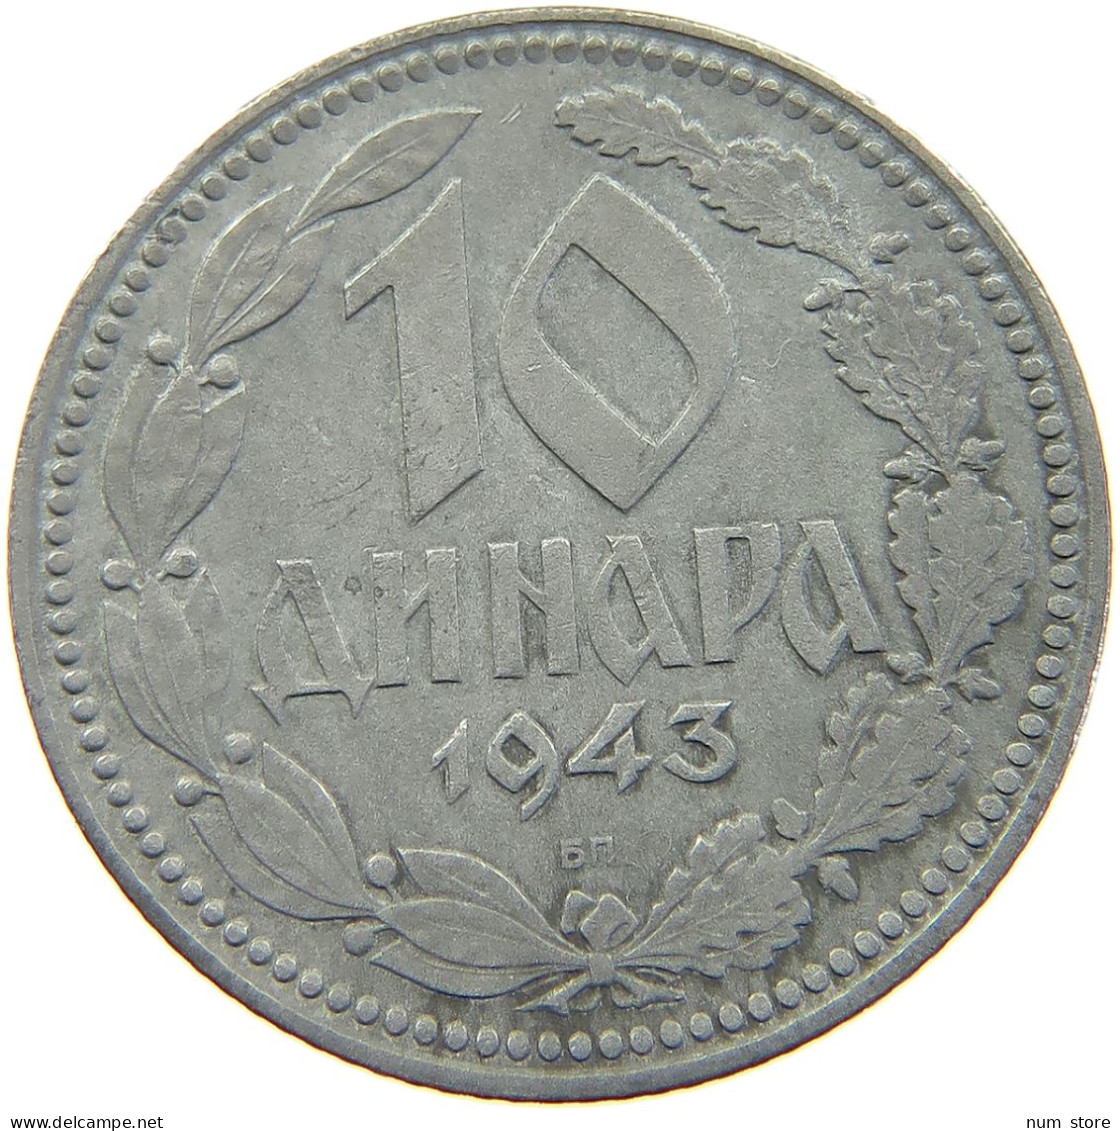 SERBIA 10 DINARA 1943  #a049 0501 - Serbia